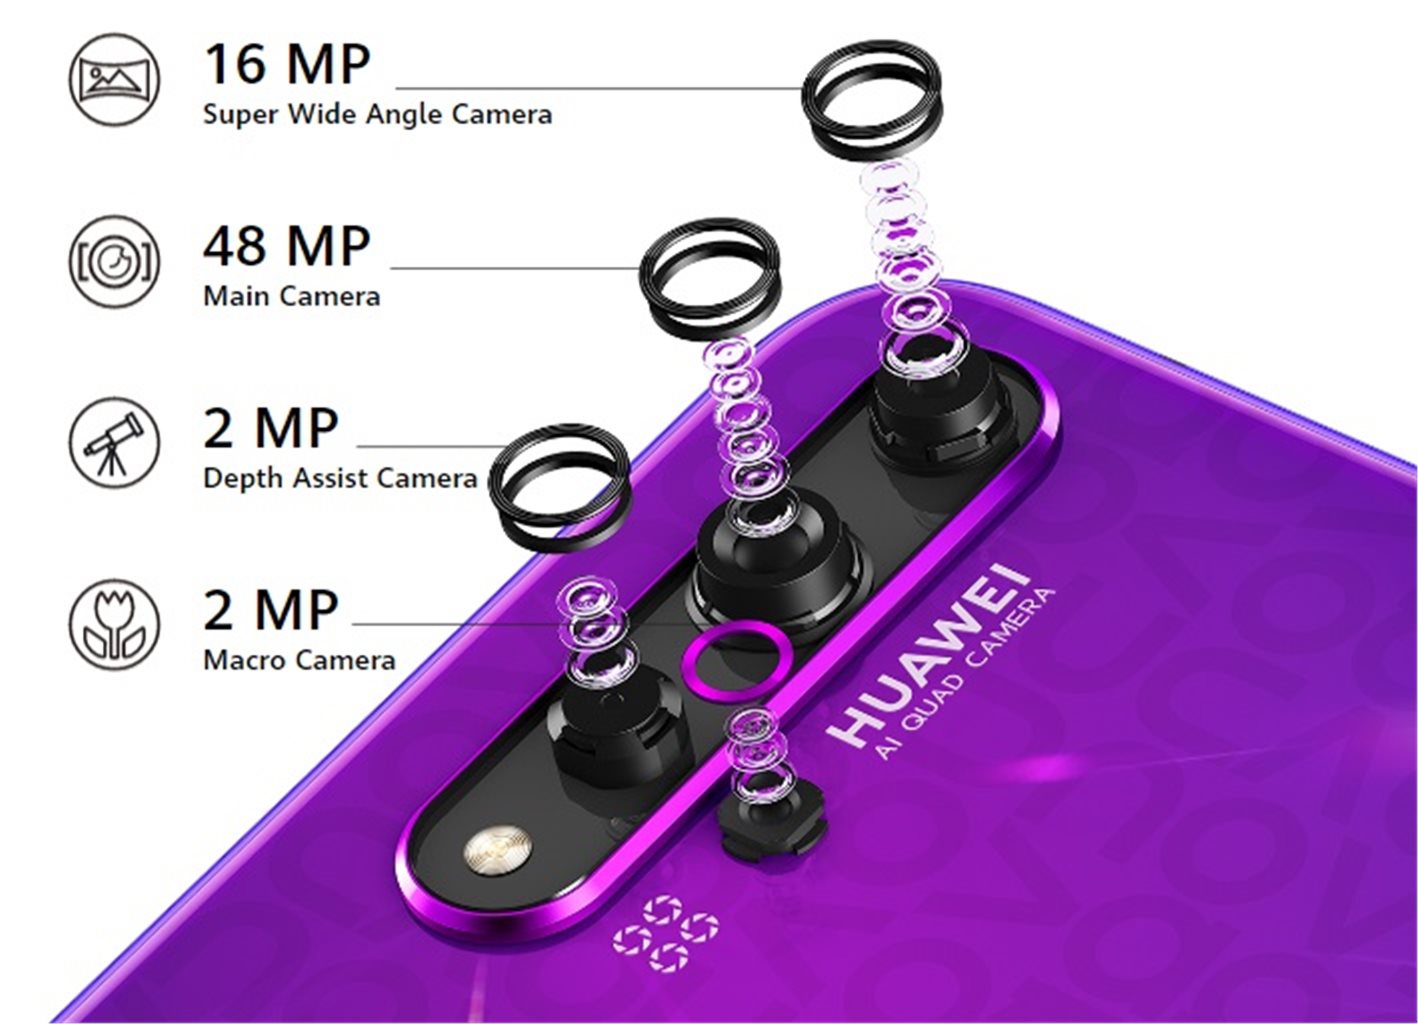 Huawei Nova 5T Dual Sim, Midsummer Purple